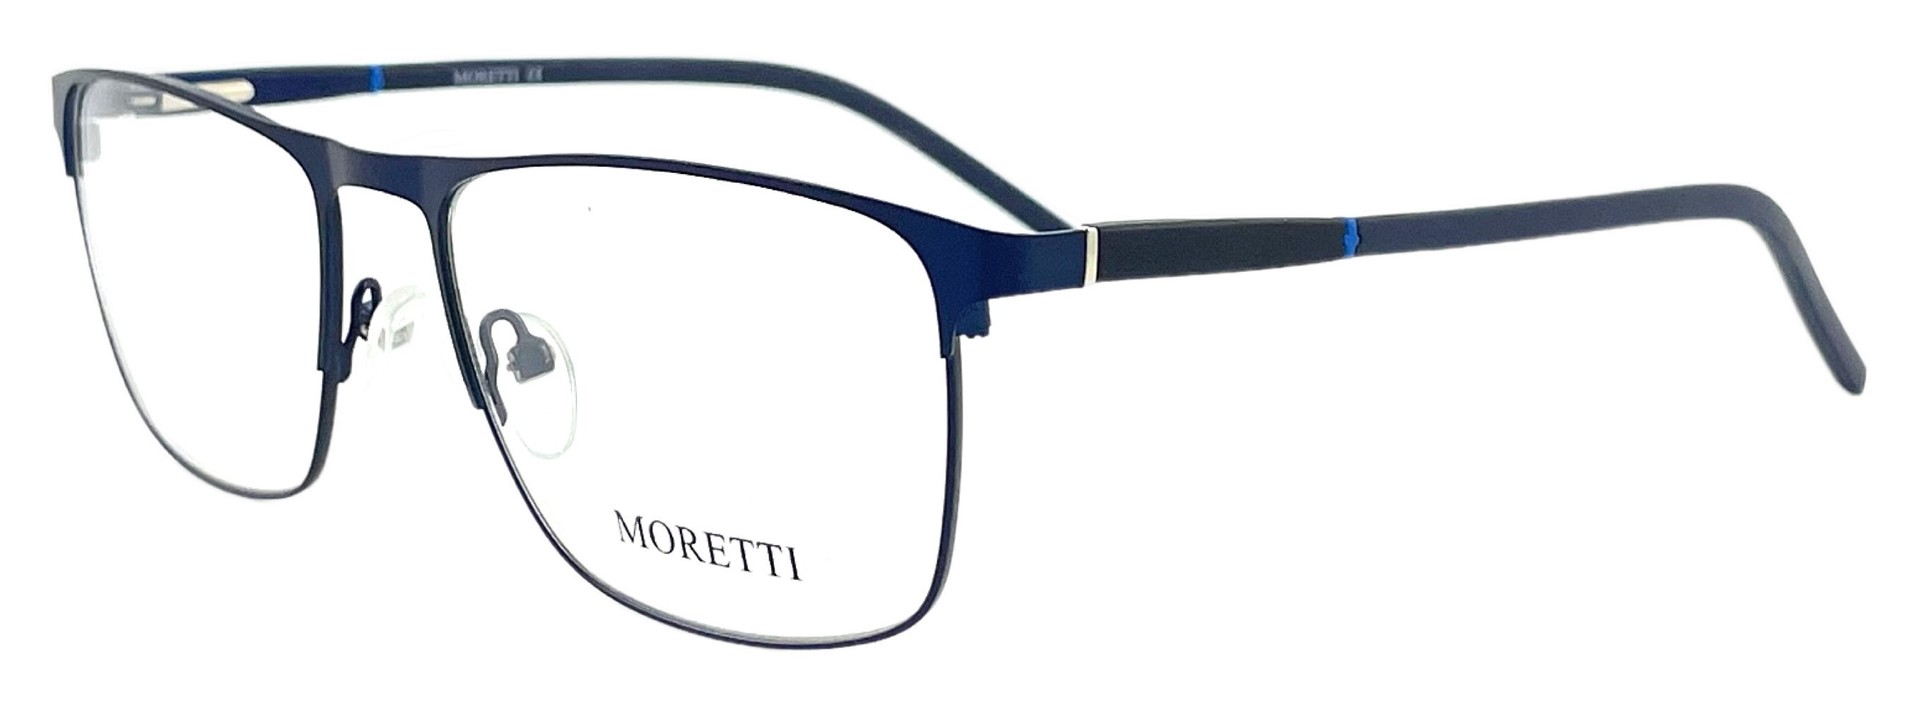 Moretti HE01-02 C6A 2